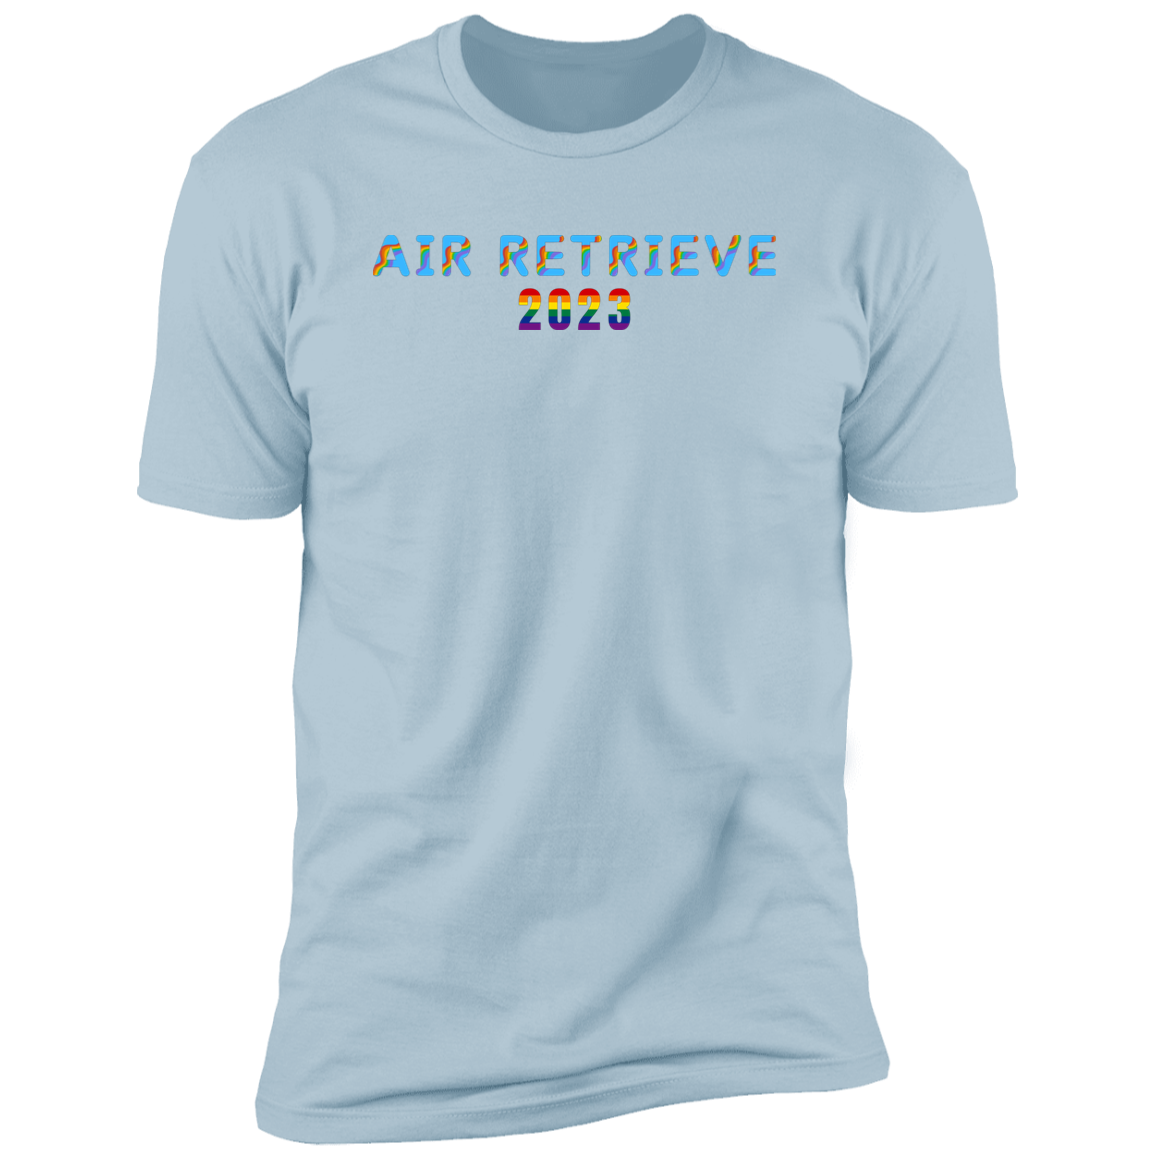 Air Retrieve 2023 Pride Dock diving t-shirt, dog pride air retrieve dock diving shirt for humans, in light blue